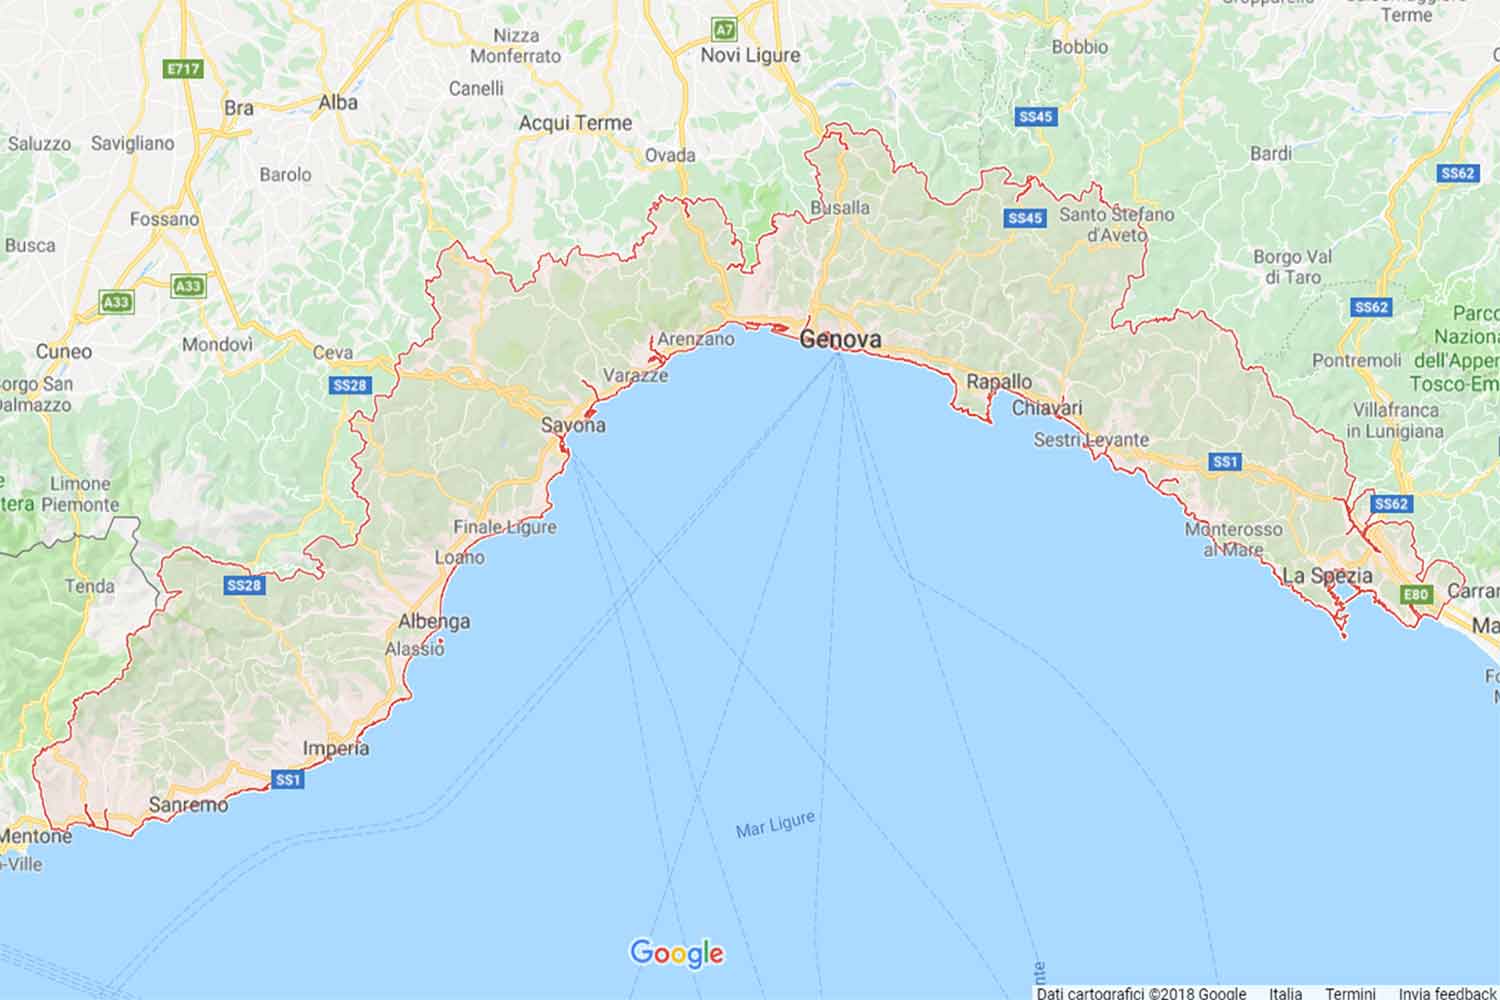 Liguria - Savona - Vendone Preventivi Veloci google maps